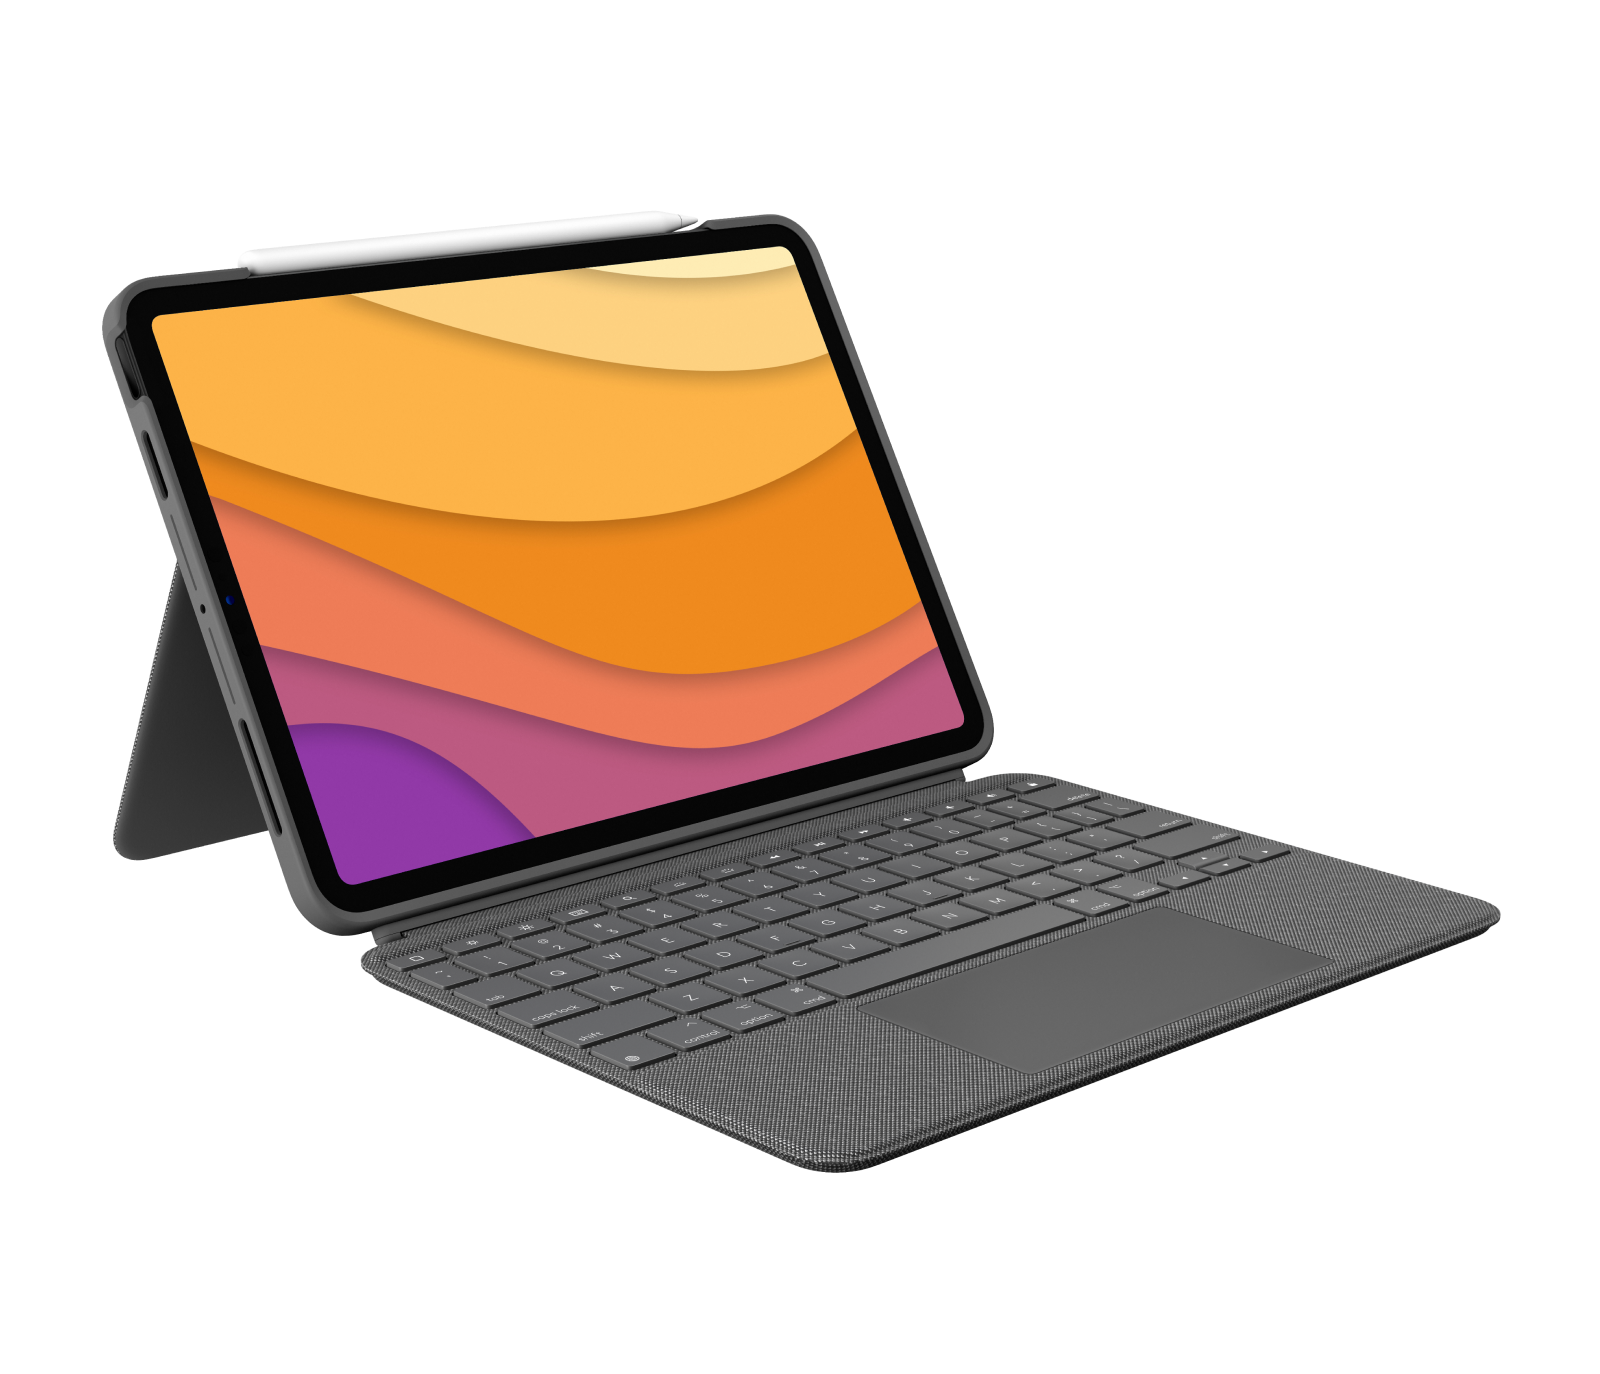 Trackpad Smart Magic Keyboard for iPad Air 4th Generation 2020/iPad Pro 11 2018，Auto Sleep/Wake-10 Color Backlight New iPad Air 4 2020 10.9 inch Case with Keyboard 